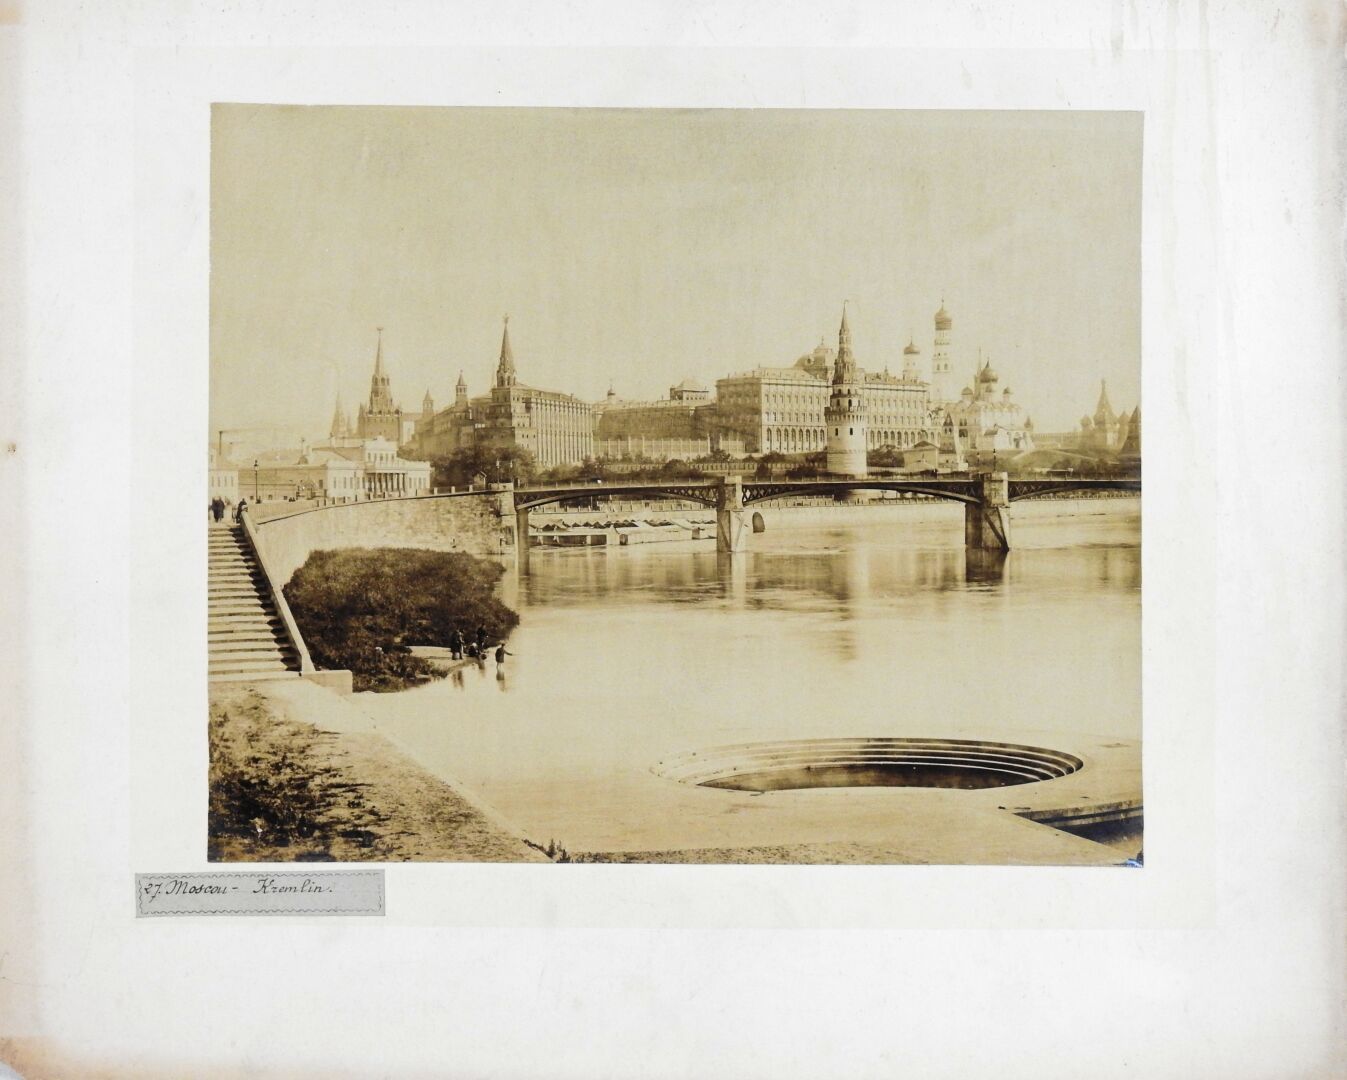 Null Russie. Le Kremlin. Tirage albuminé circa 1880. Format 21,5 cm x 26,5 cm.